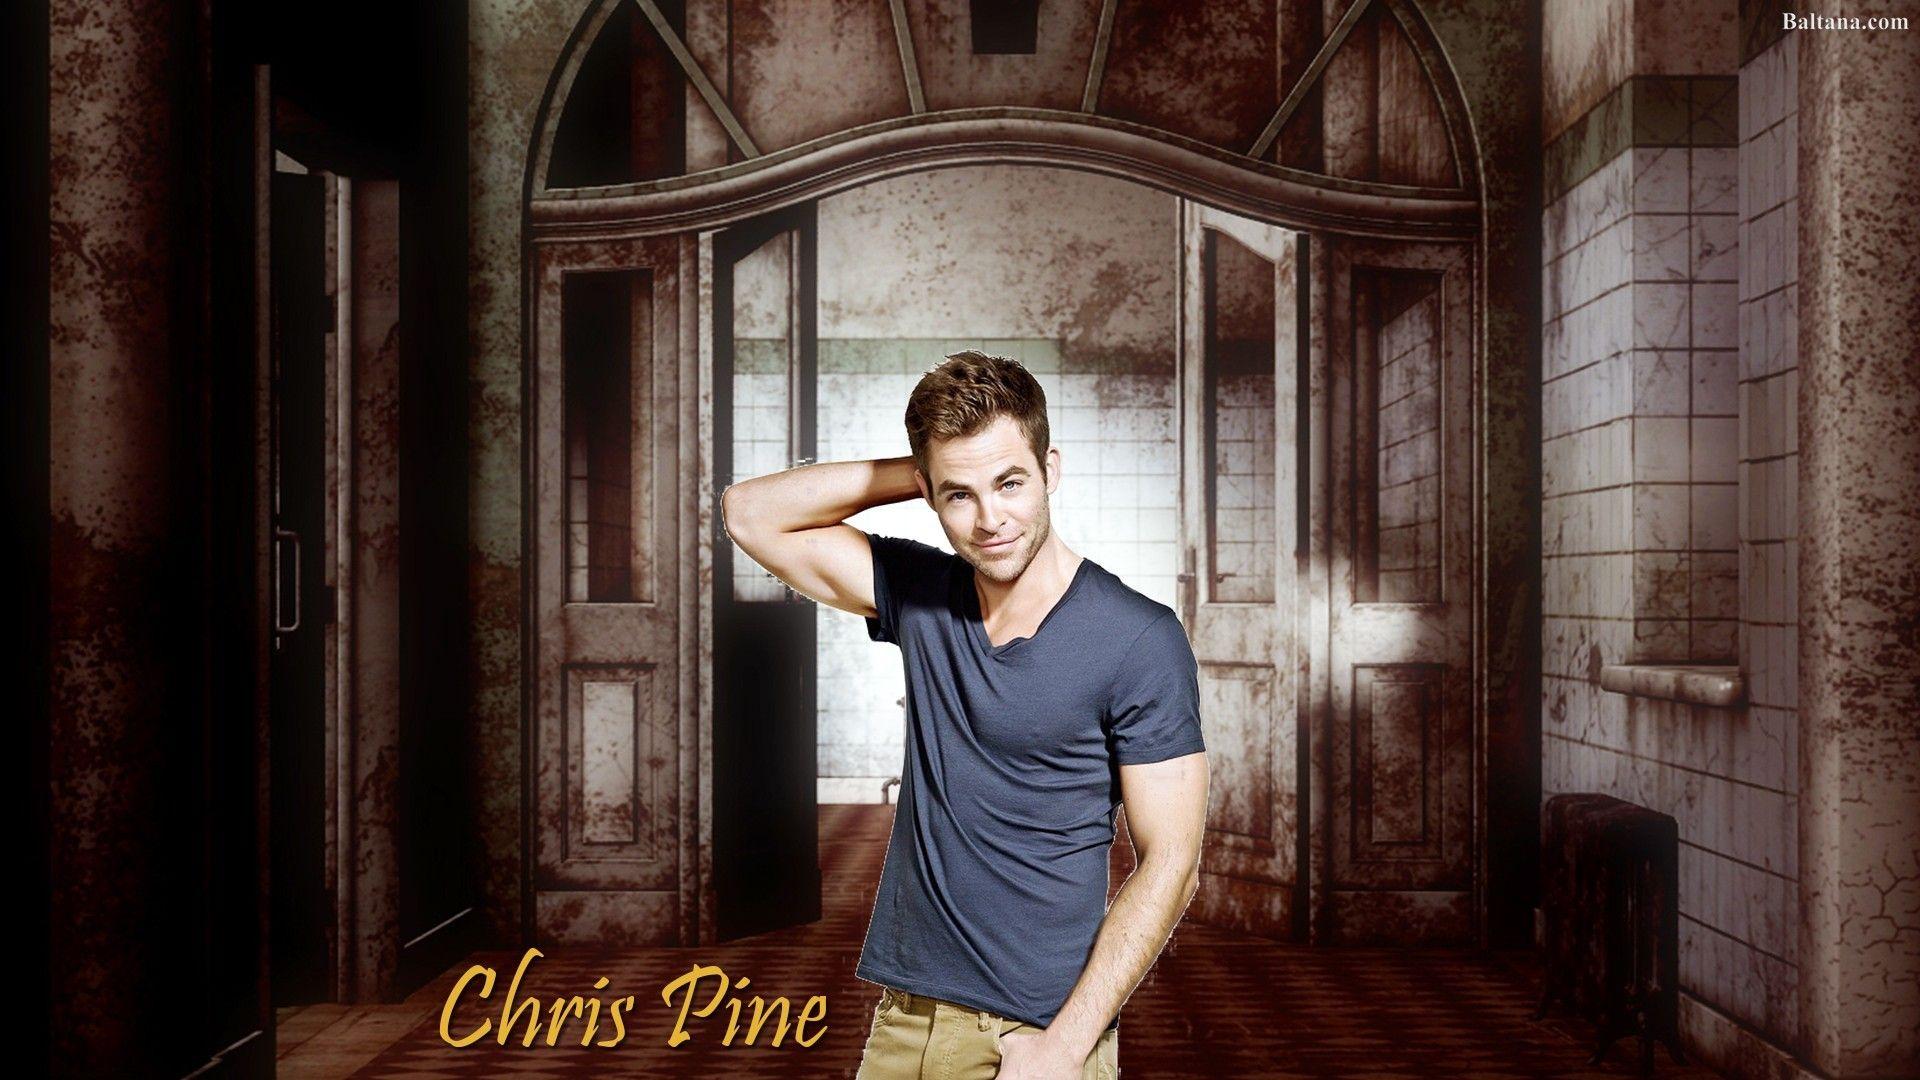 Chris Pine Best Wallpaper 29653